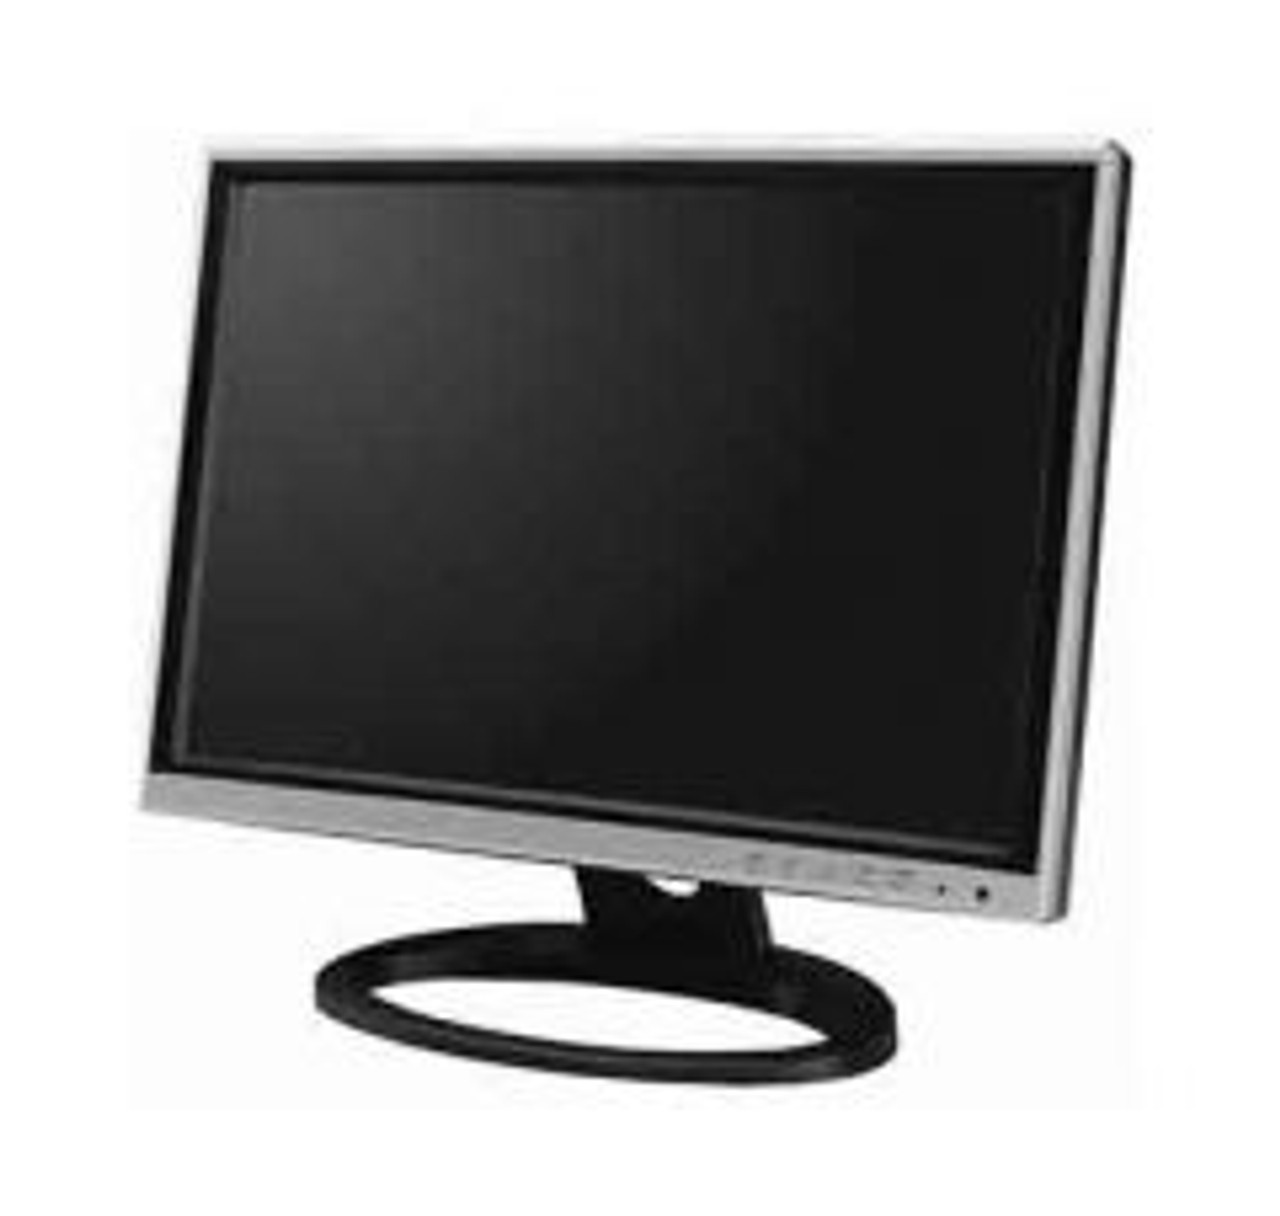 P2219H | Dell | 22-inch 1920 x 1080 DisplayPort / HDMI LCD Monitor